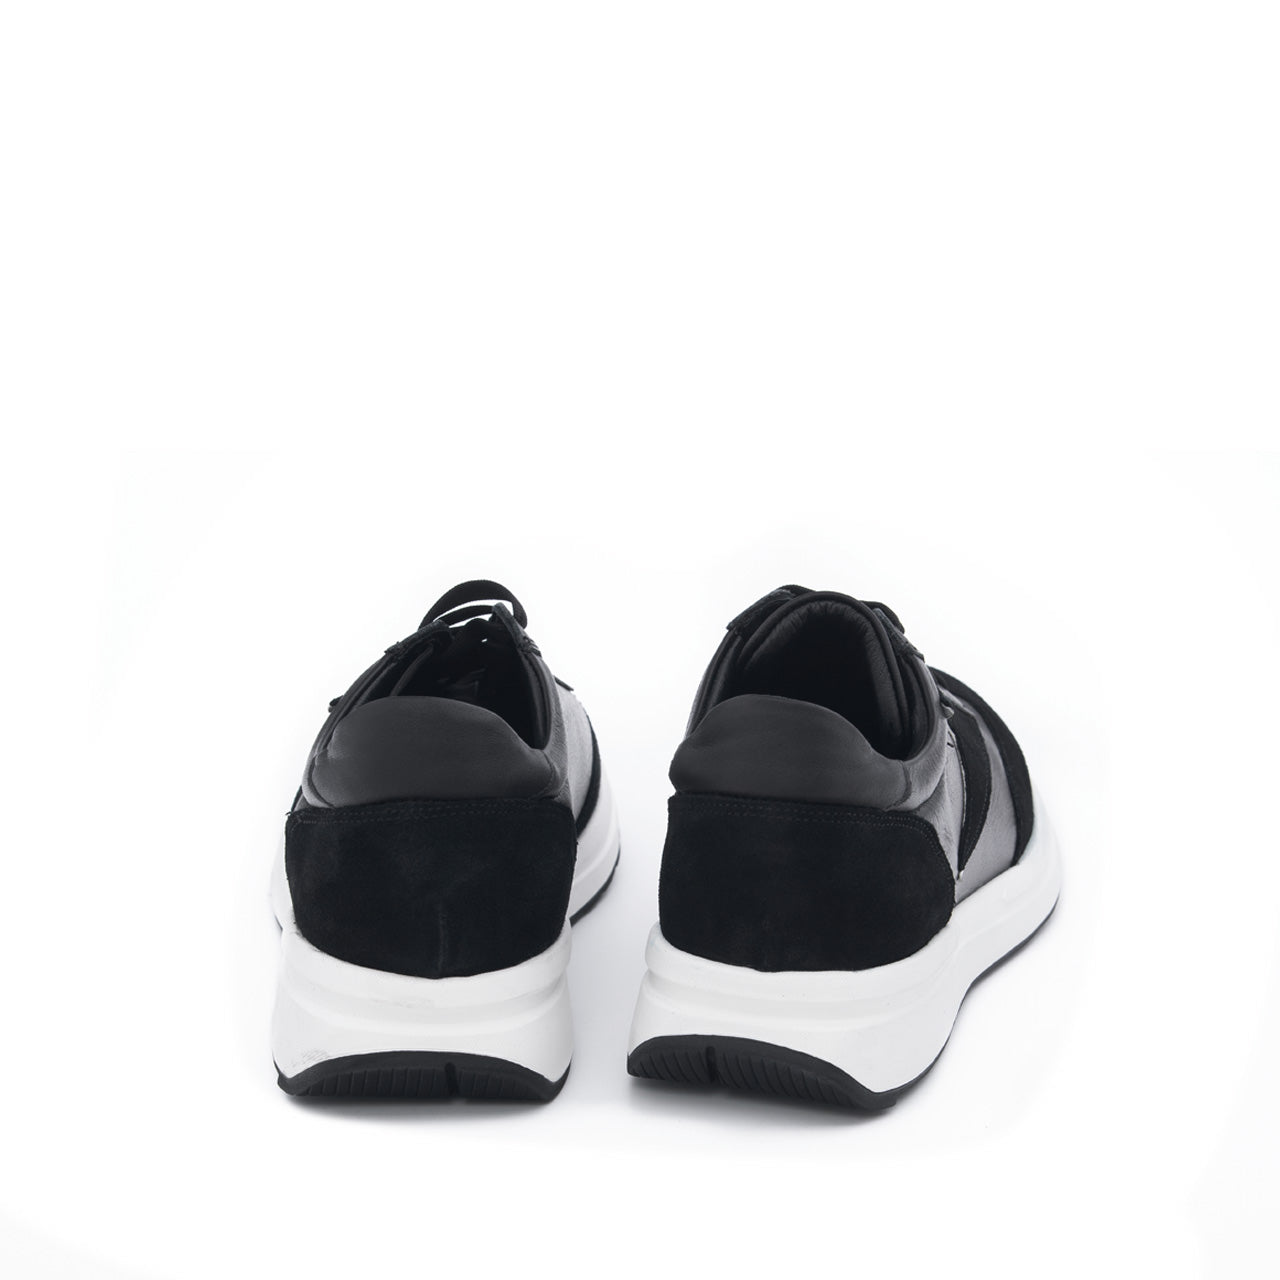 Pantofi sport barbati Echo negru-alb